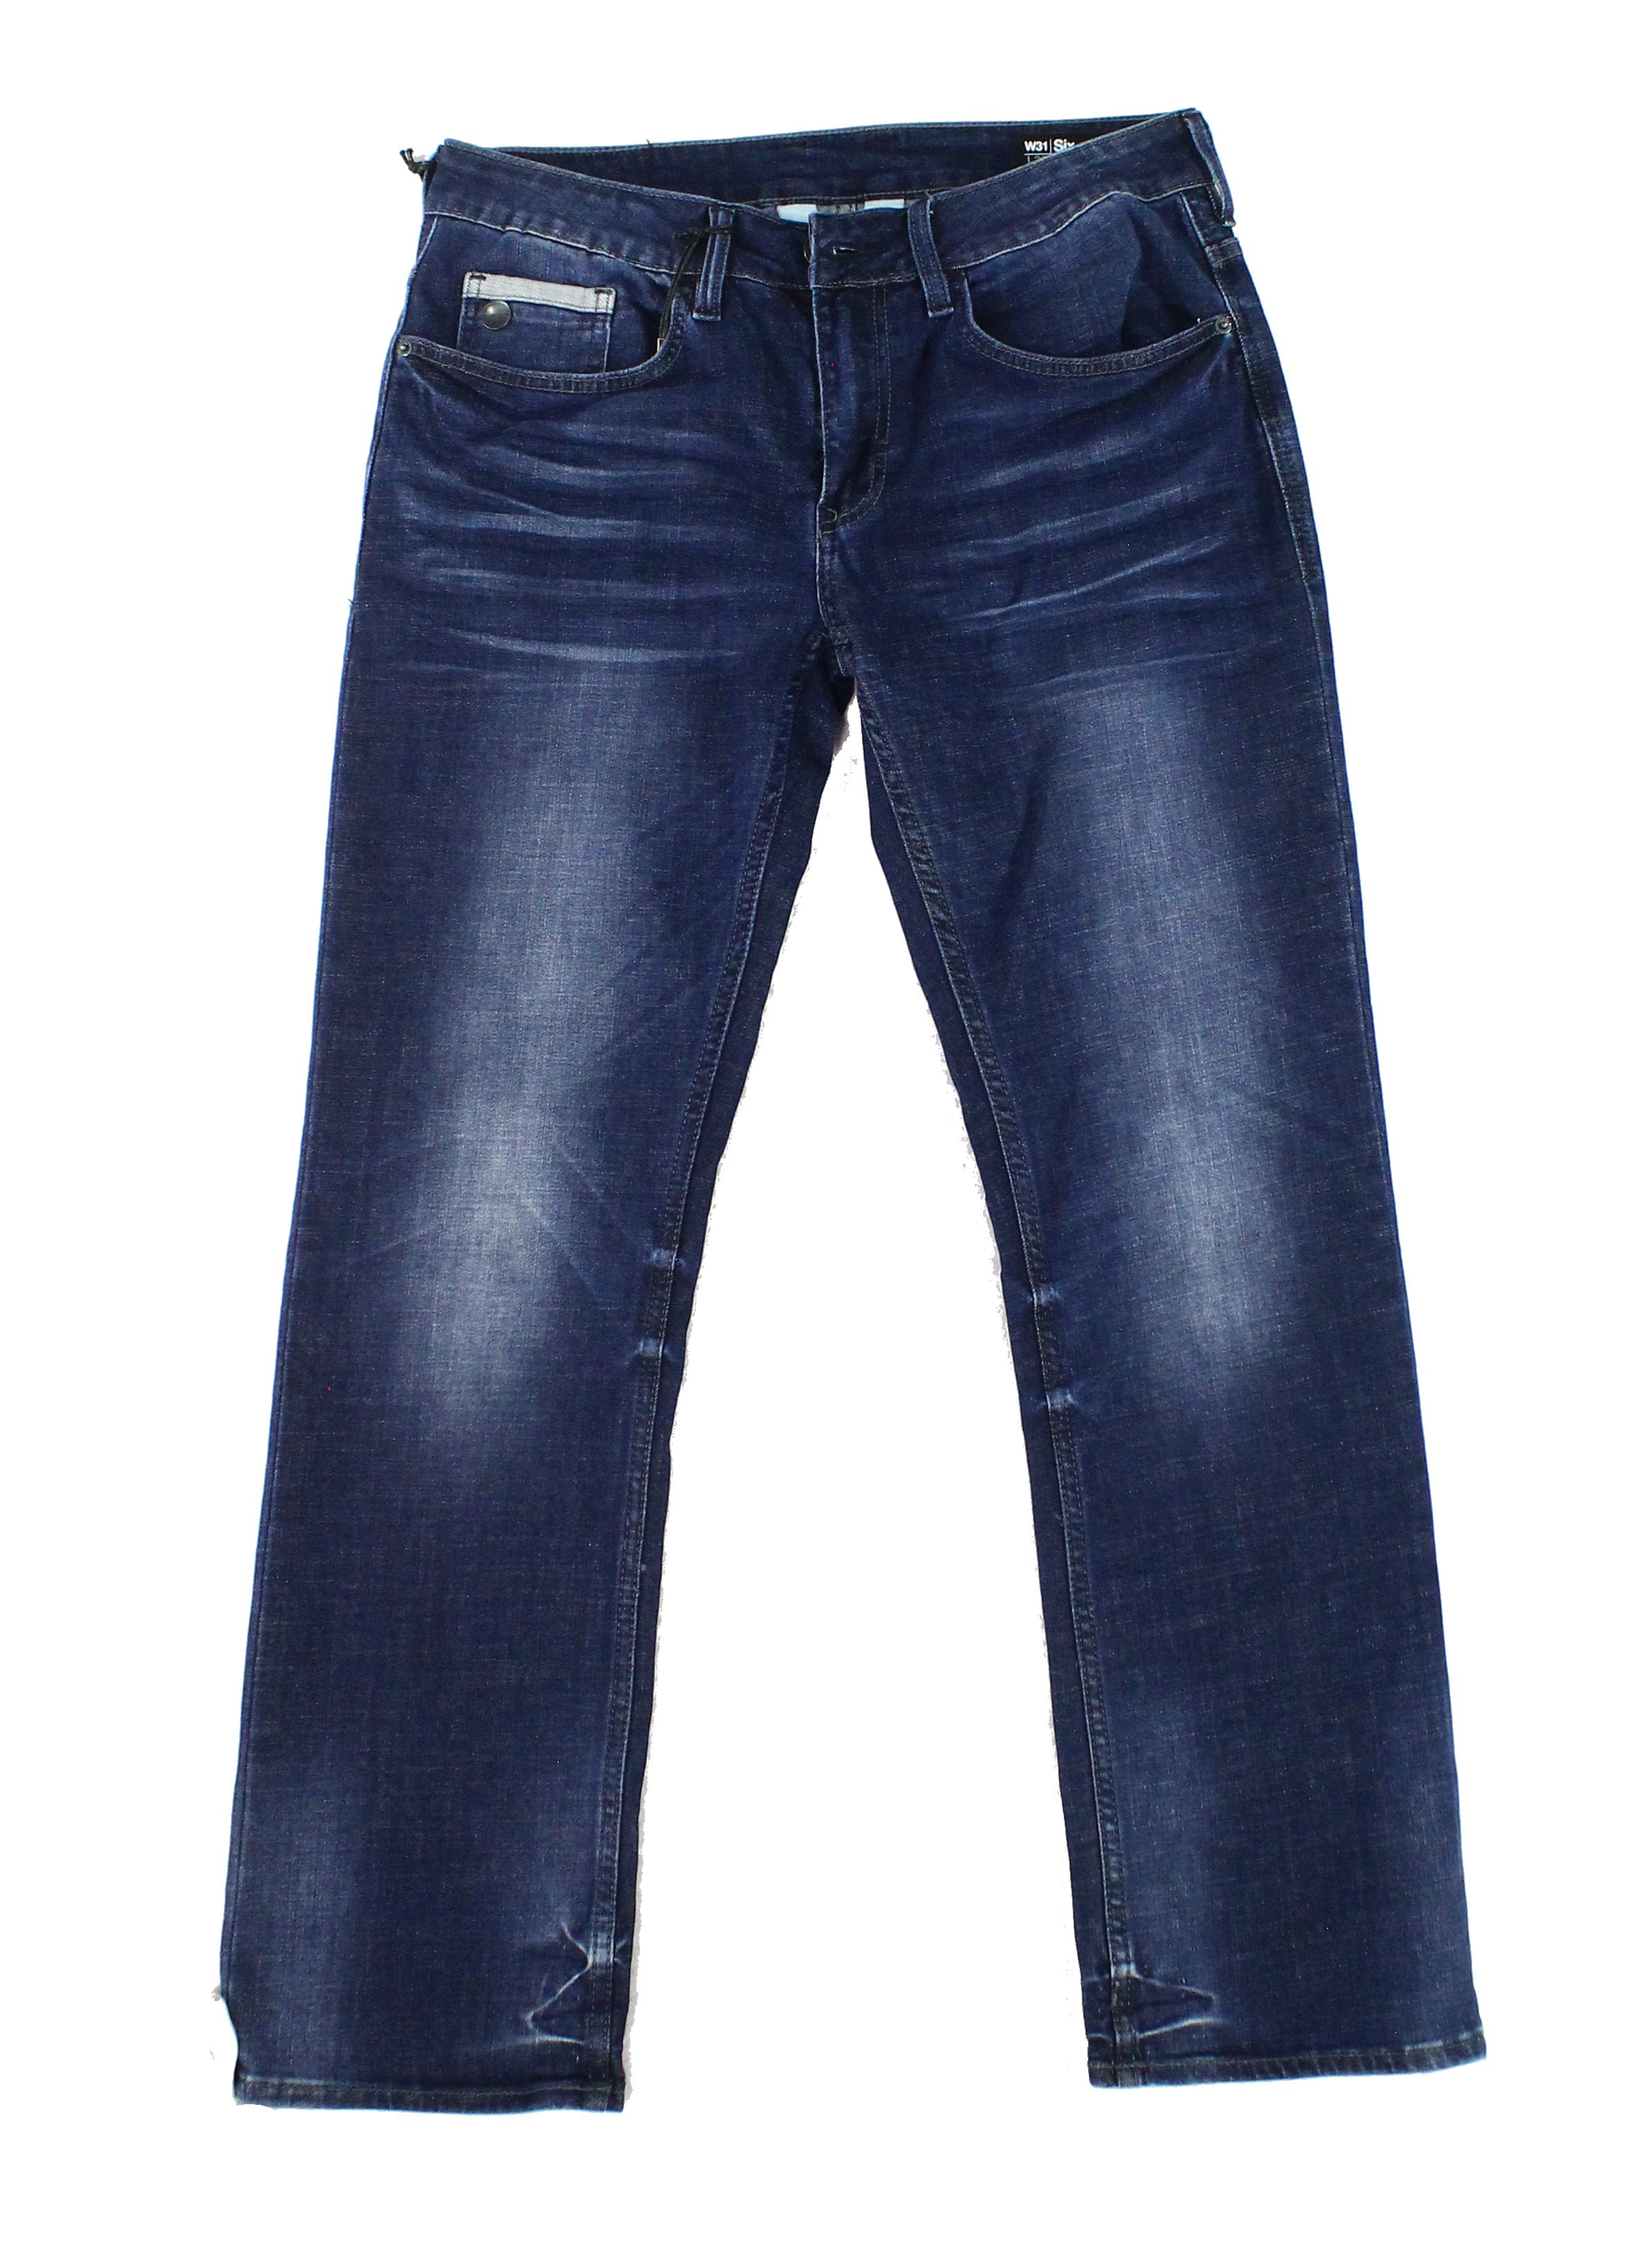 Buffalo Jeans - Buffalo David Bitton NEW Blue Mens Size 31x30 Slim ...